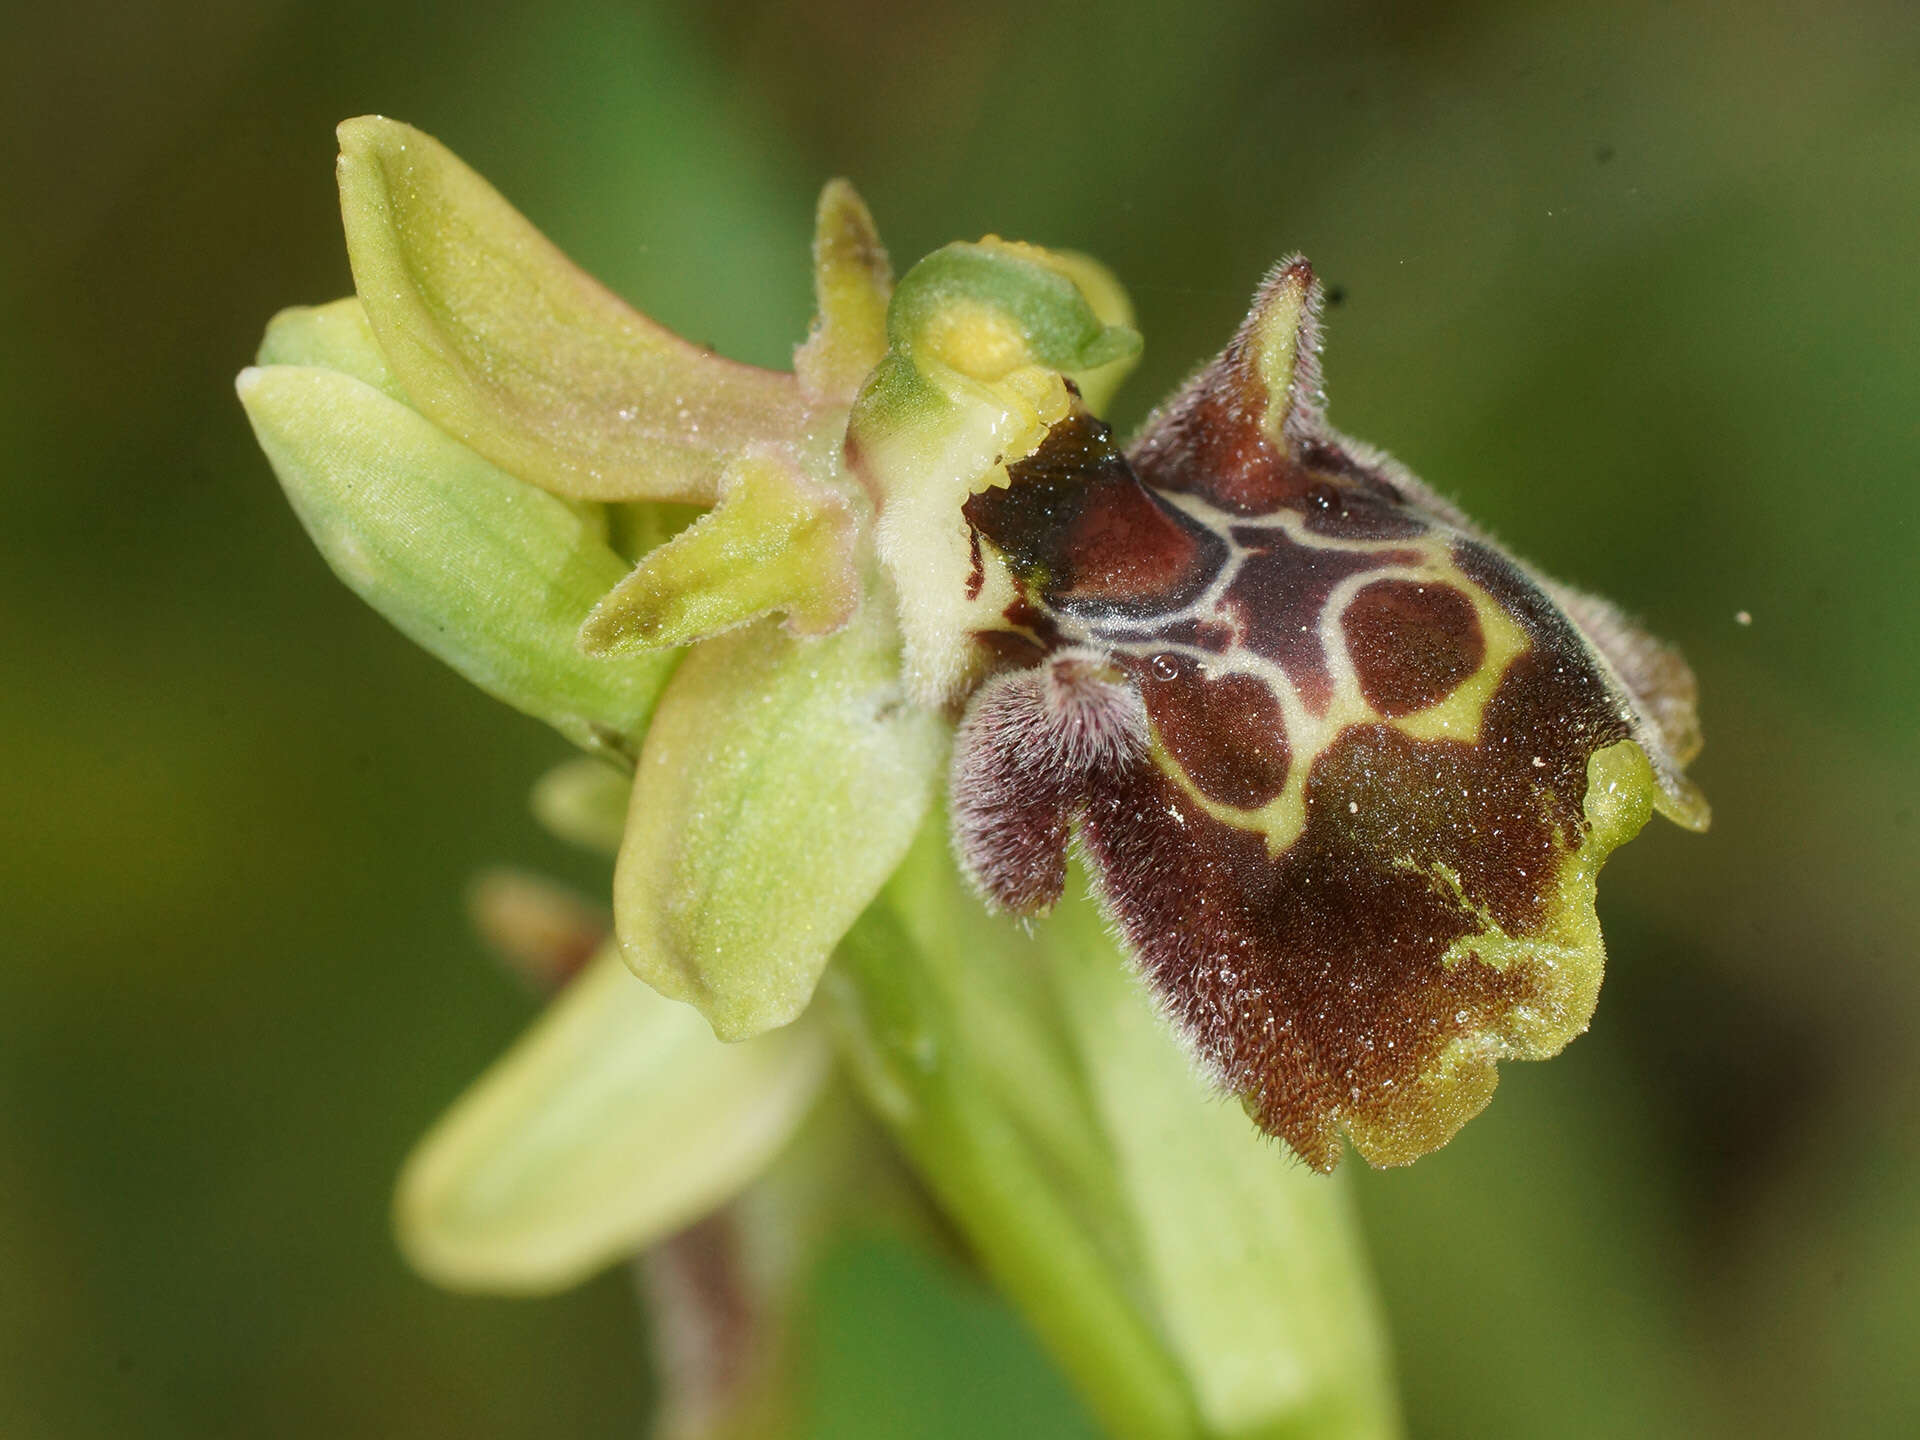 Image of Ophrys fuciflora subsp. pallidiconi Faurh.